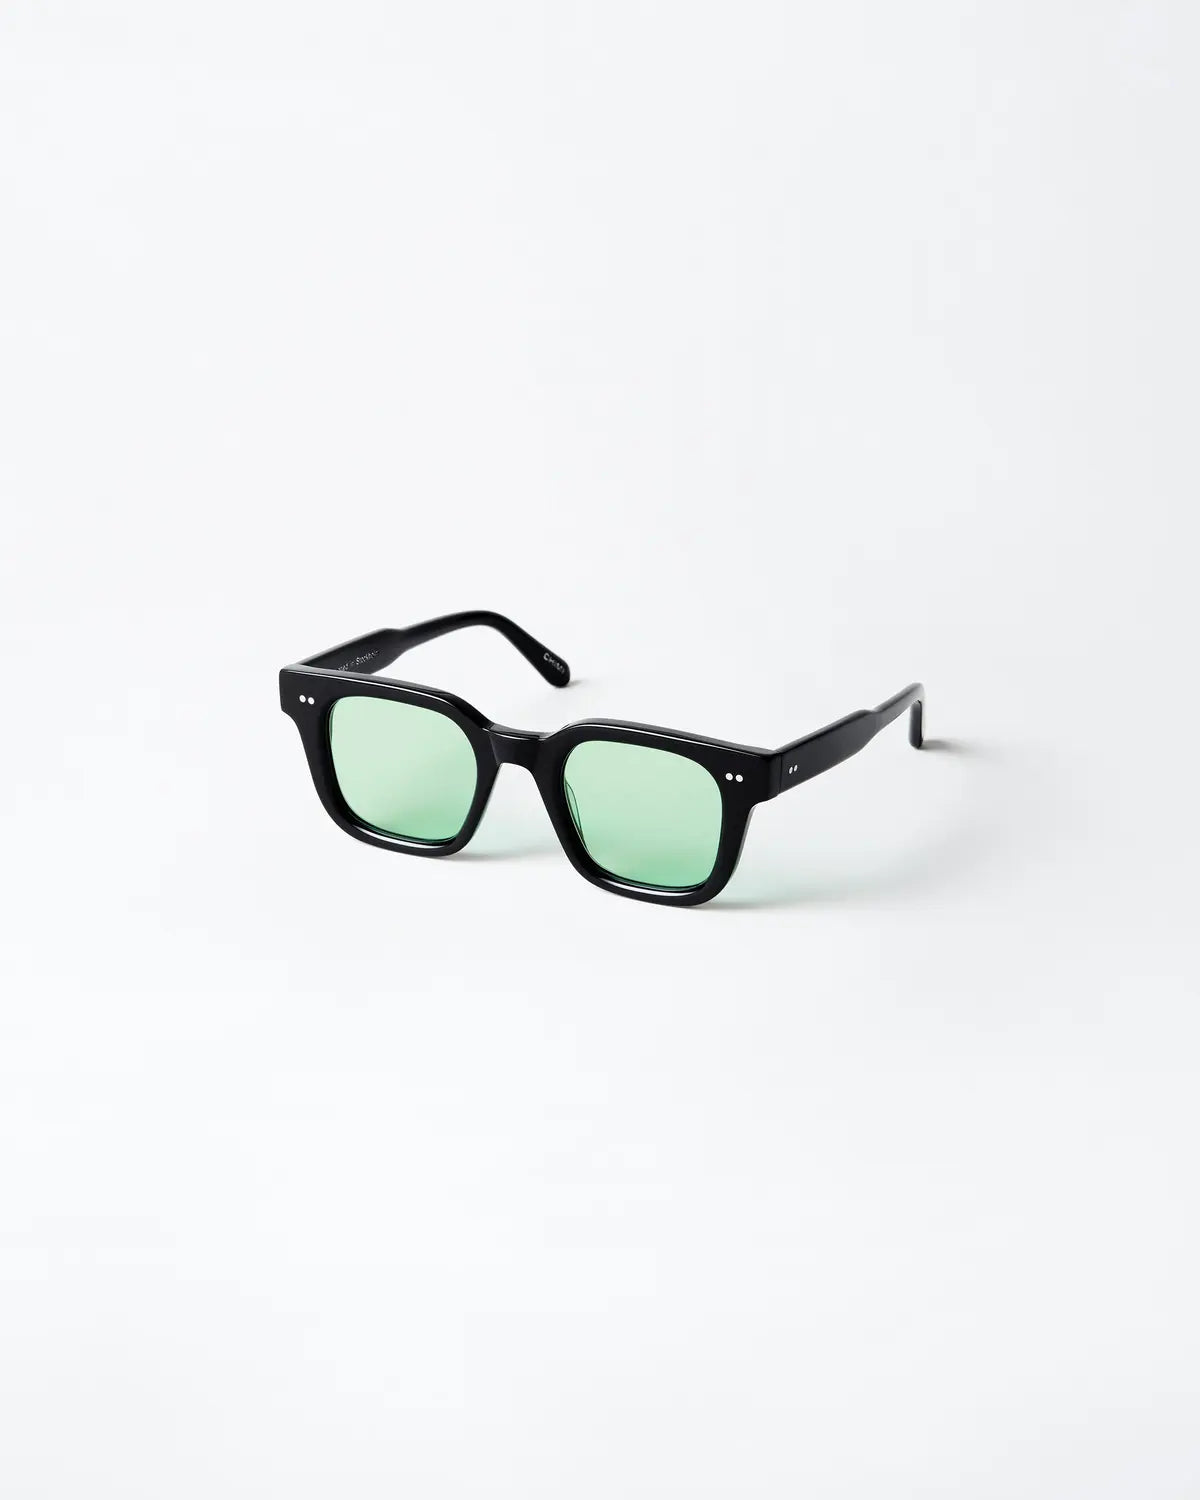 Chimi Eyewear 04 Lab Black Teal Green